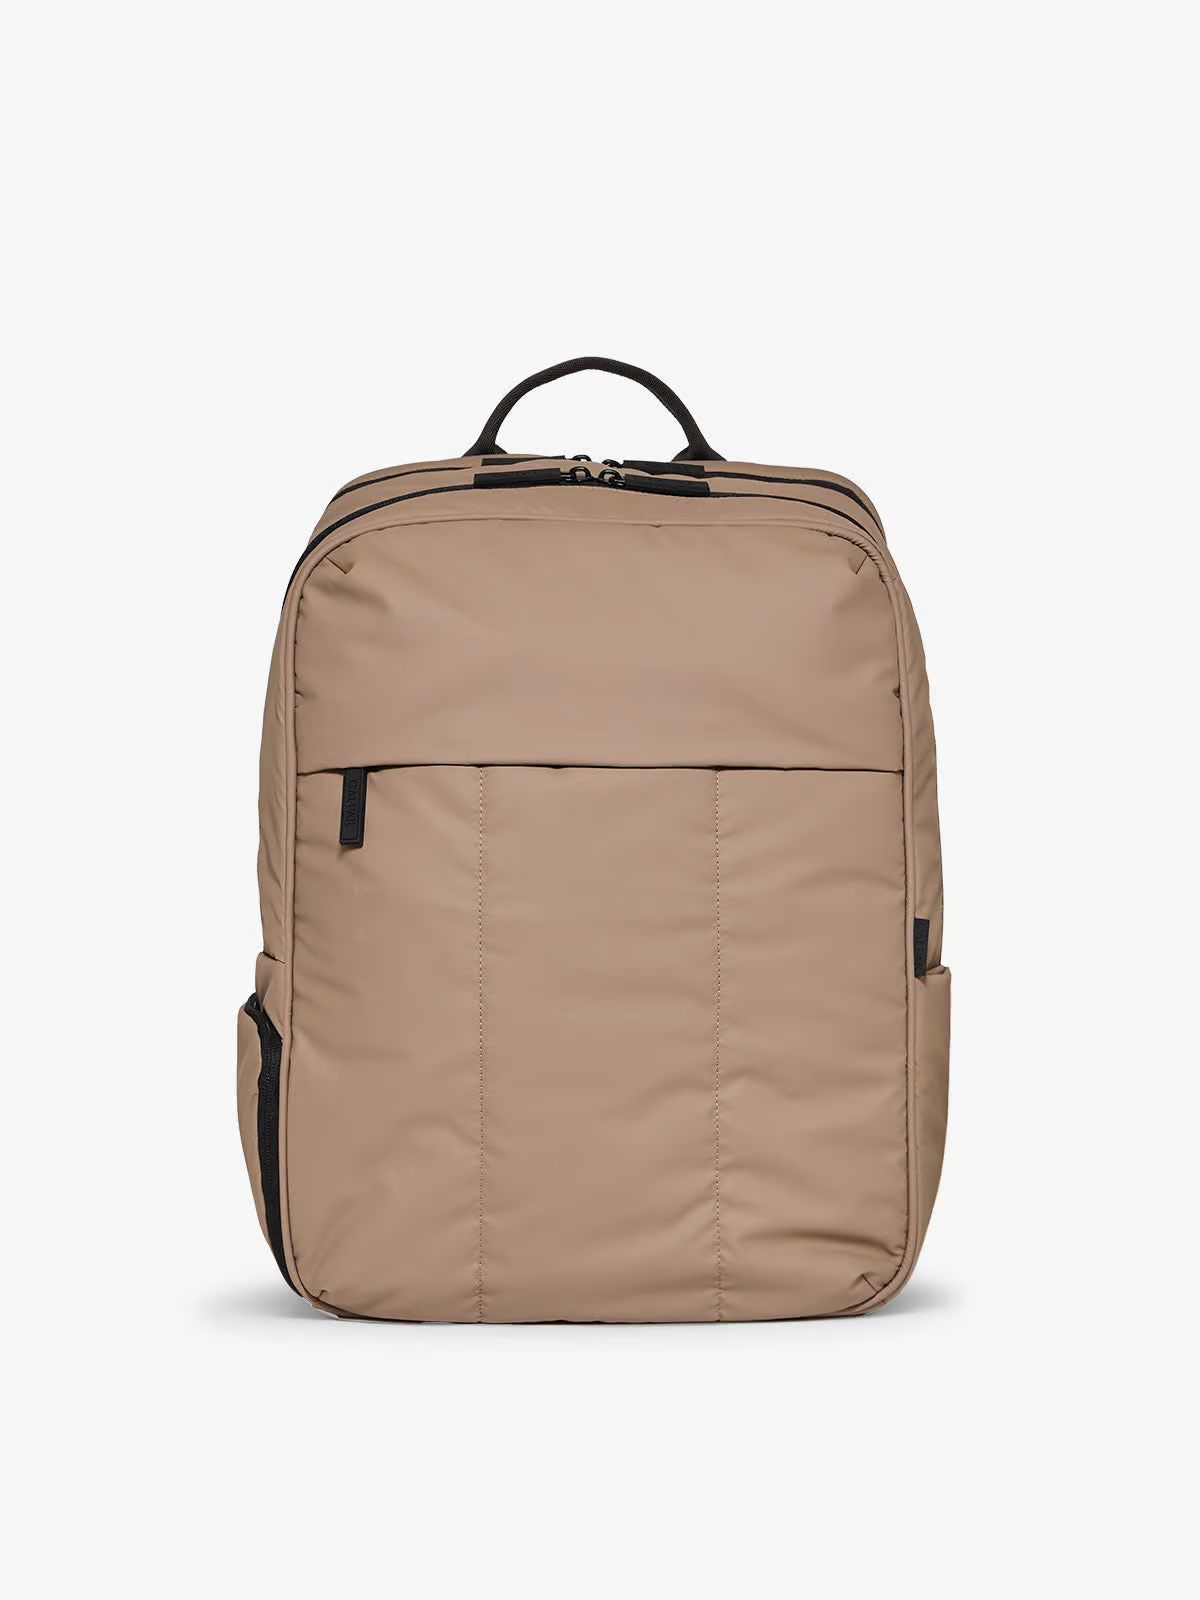 Luka 17 inch Laptop Backpack | CALPAK | CALPAK Travel